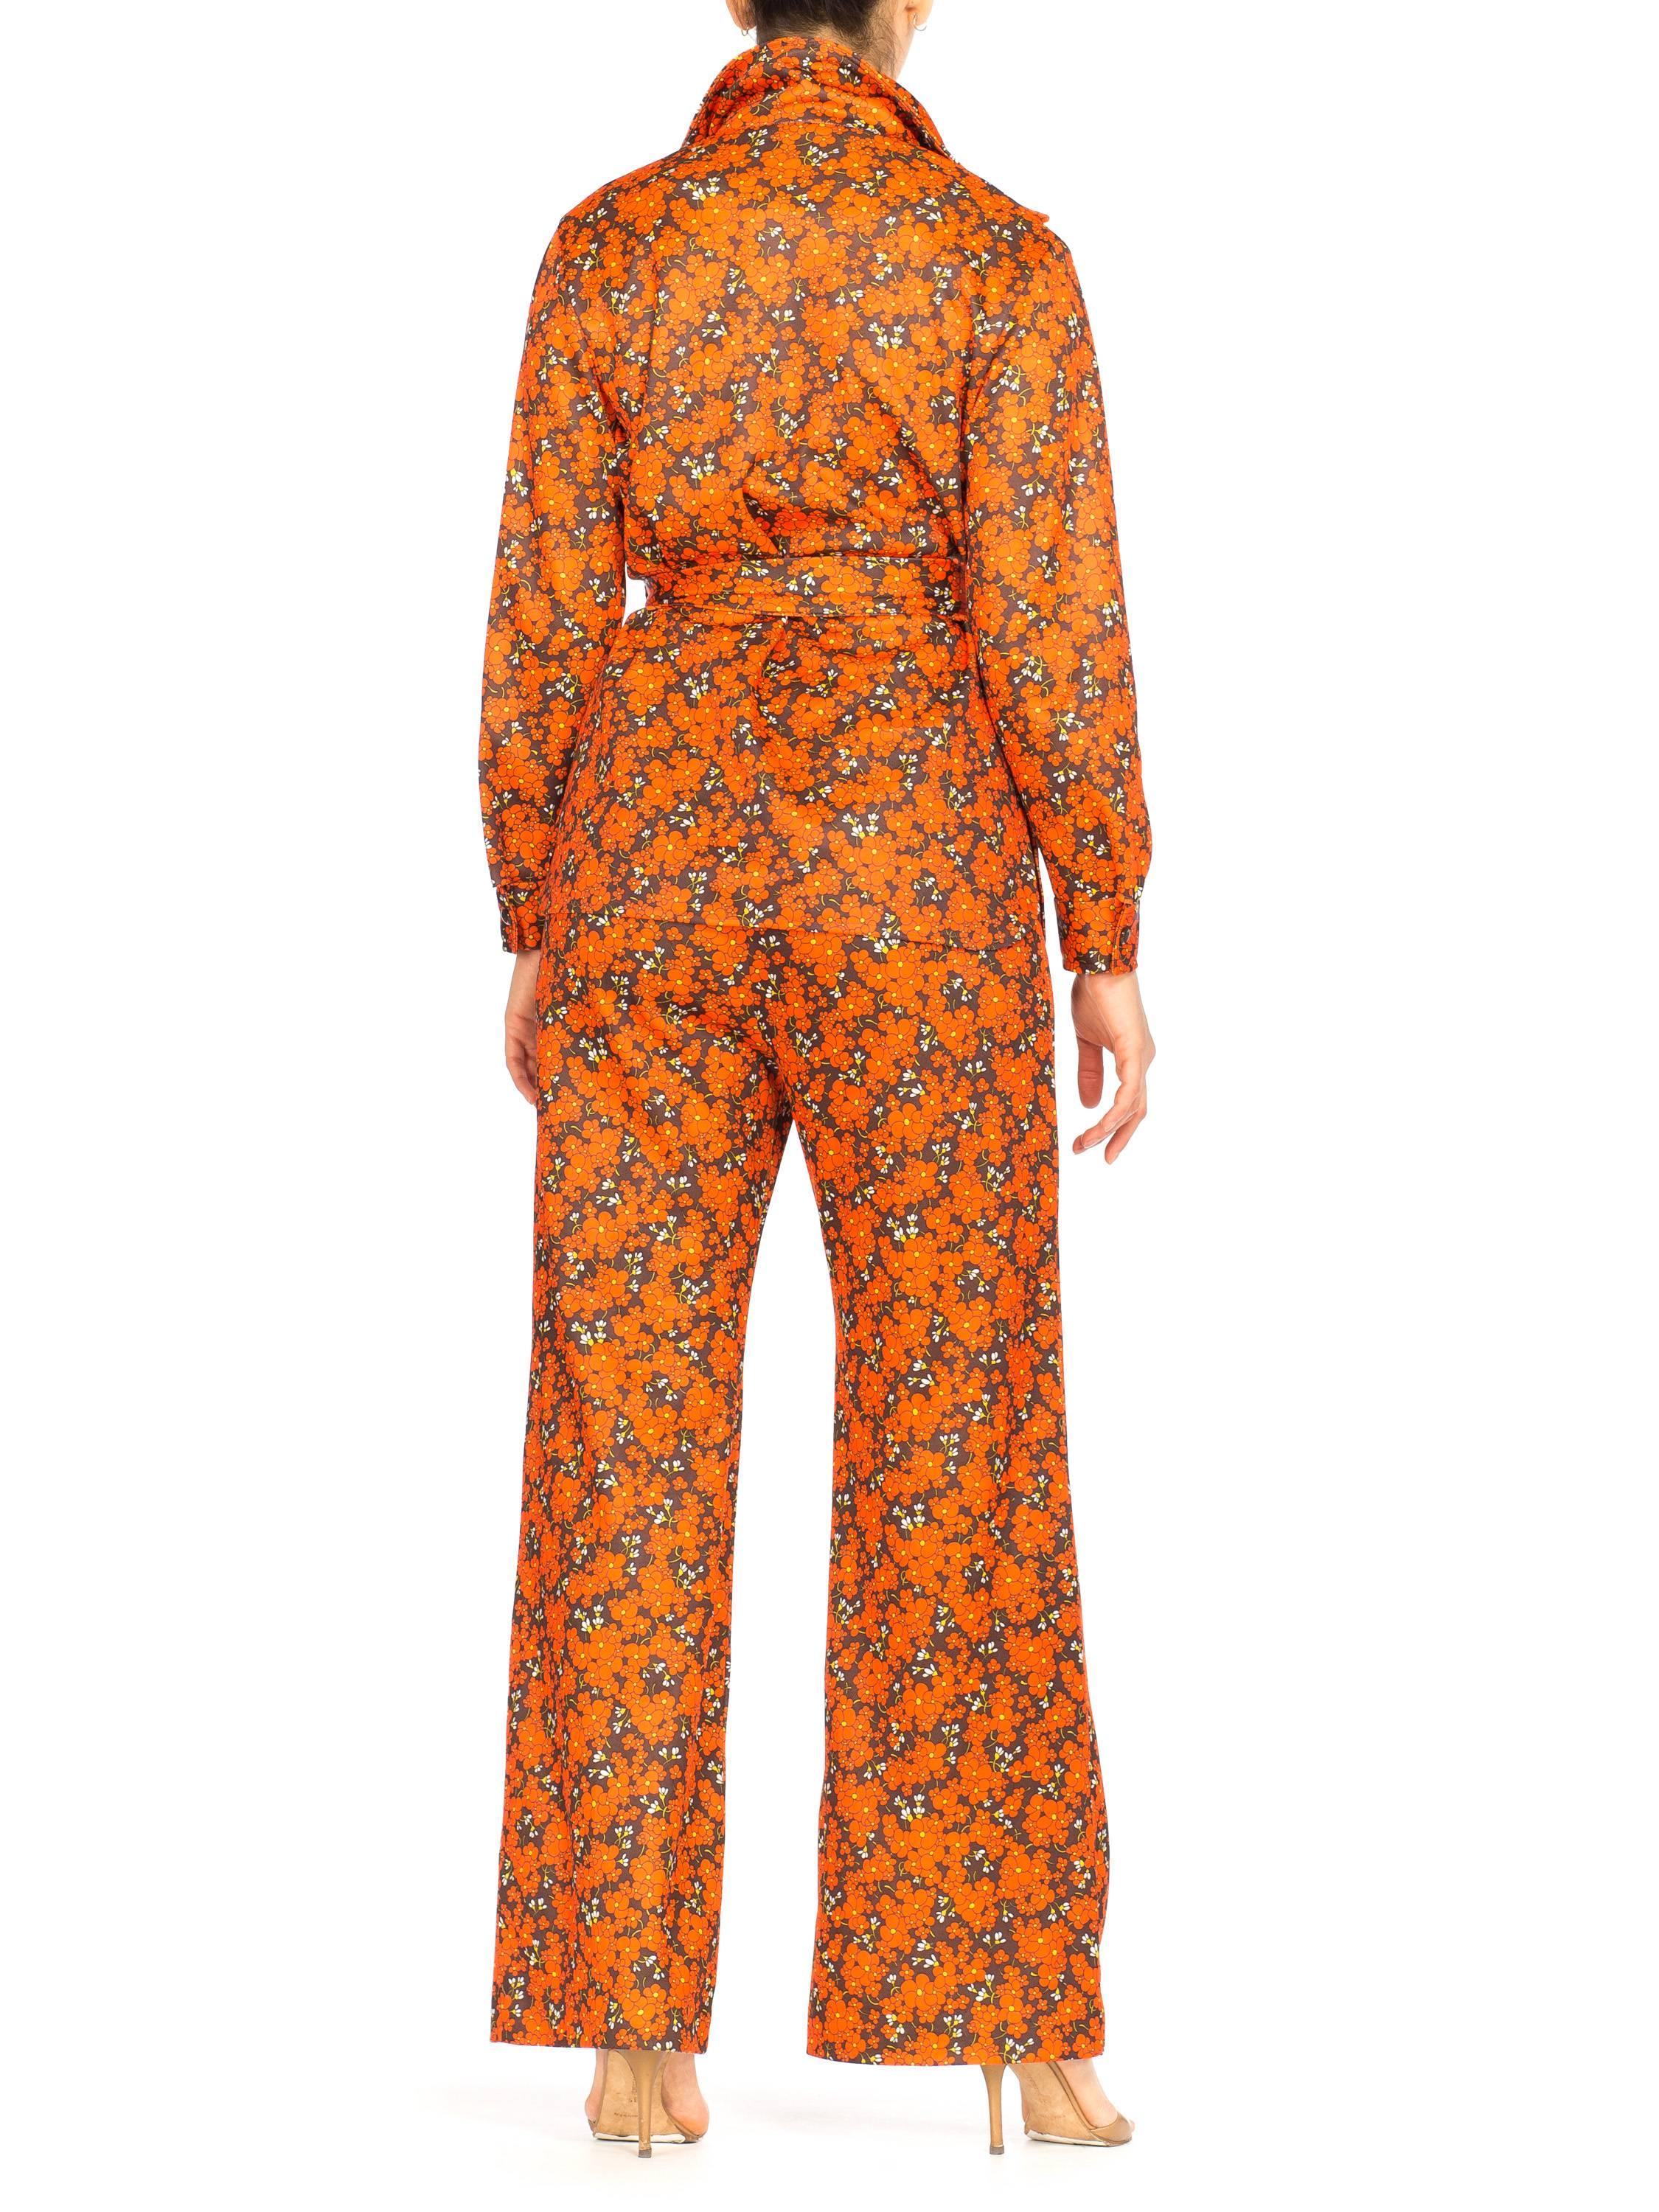 Orange and Brown Floral Mod Disco Pantsuit Set, 1970s 2